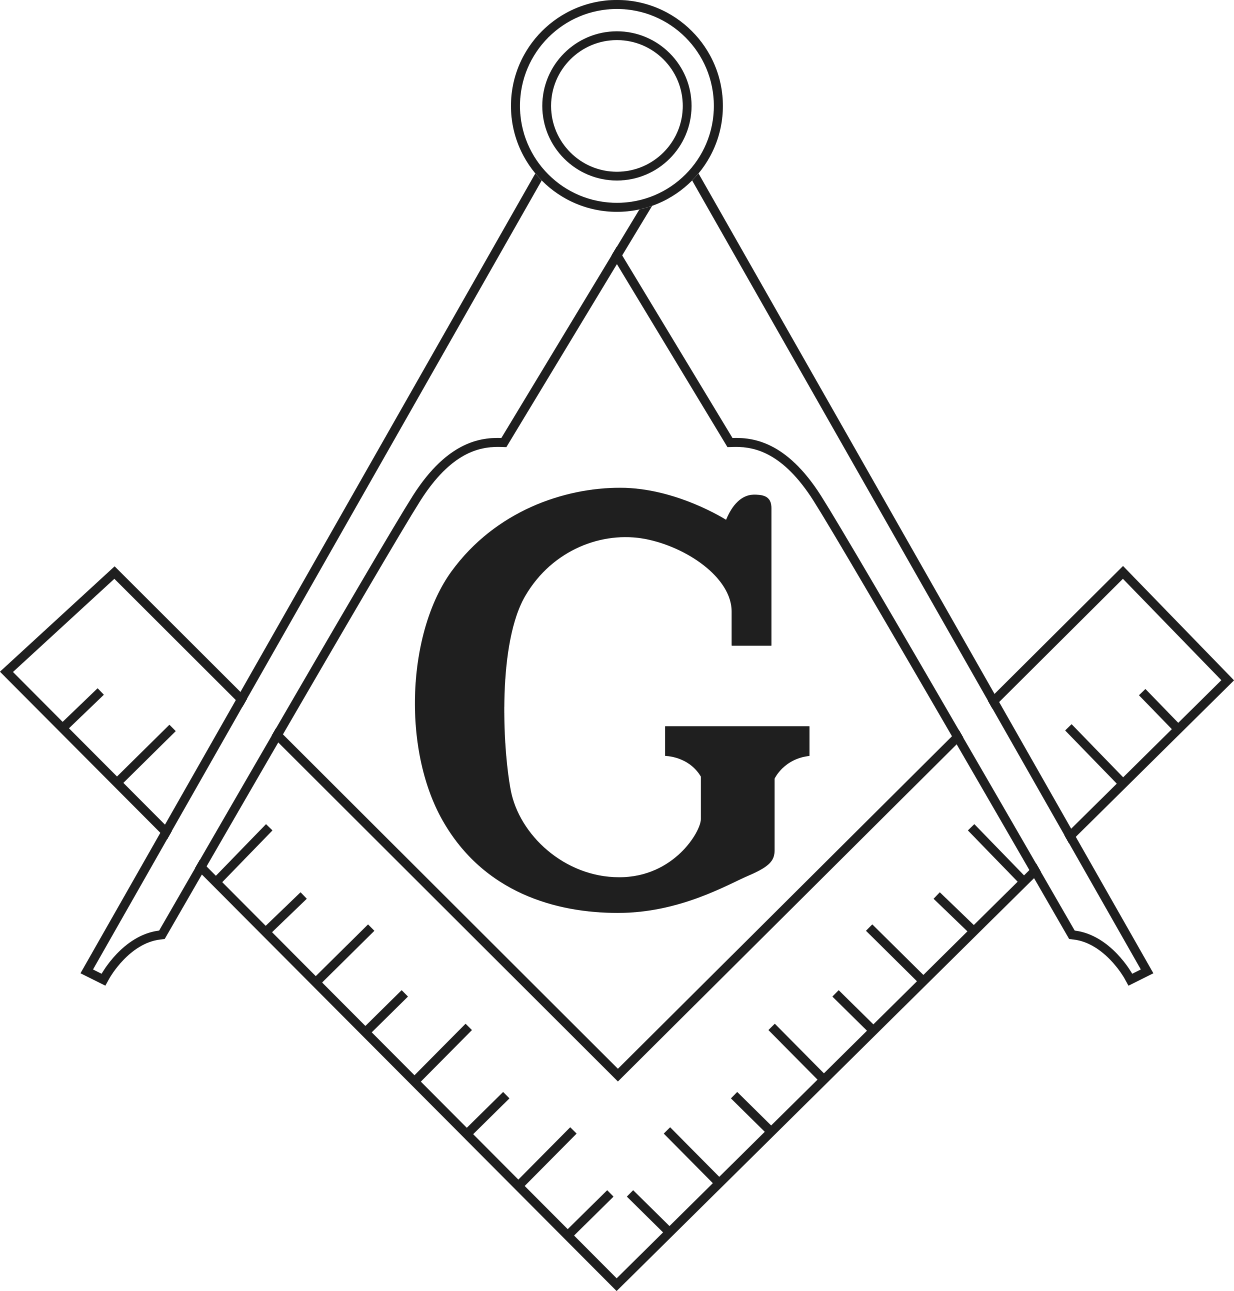 Masonic Emblems Logos Square And Compasses